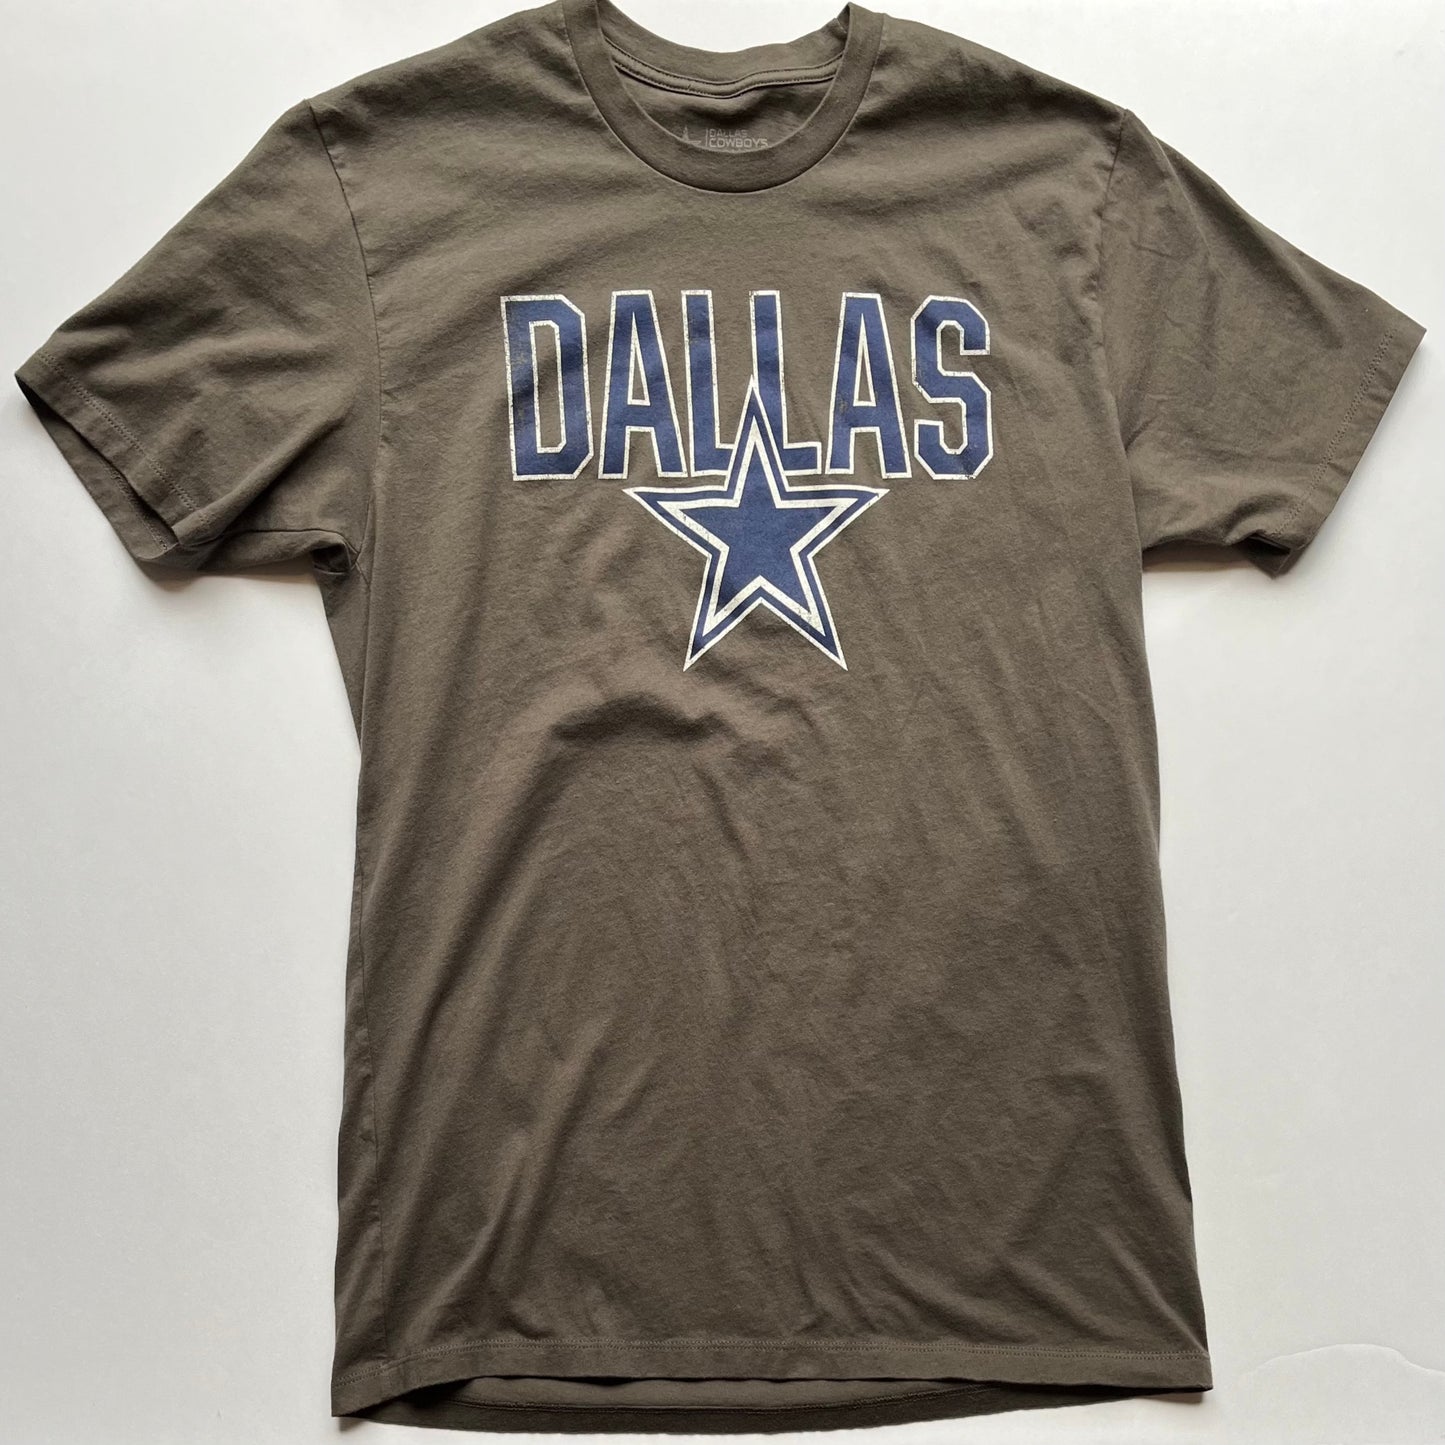 Dallas Cowboys - NFL - Dallas Cowboys Authentic Tee (Large)